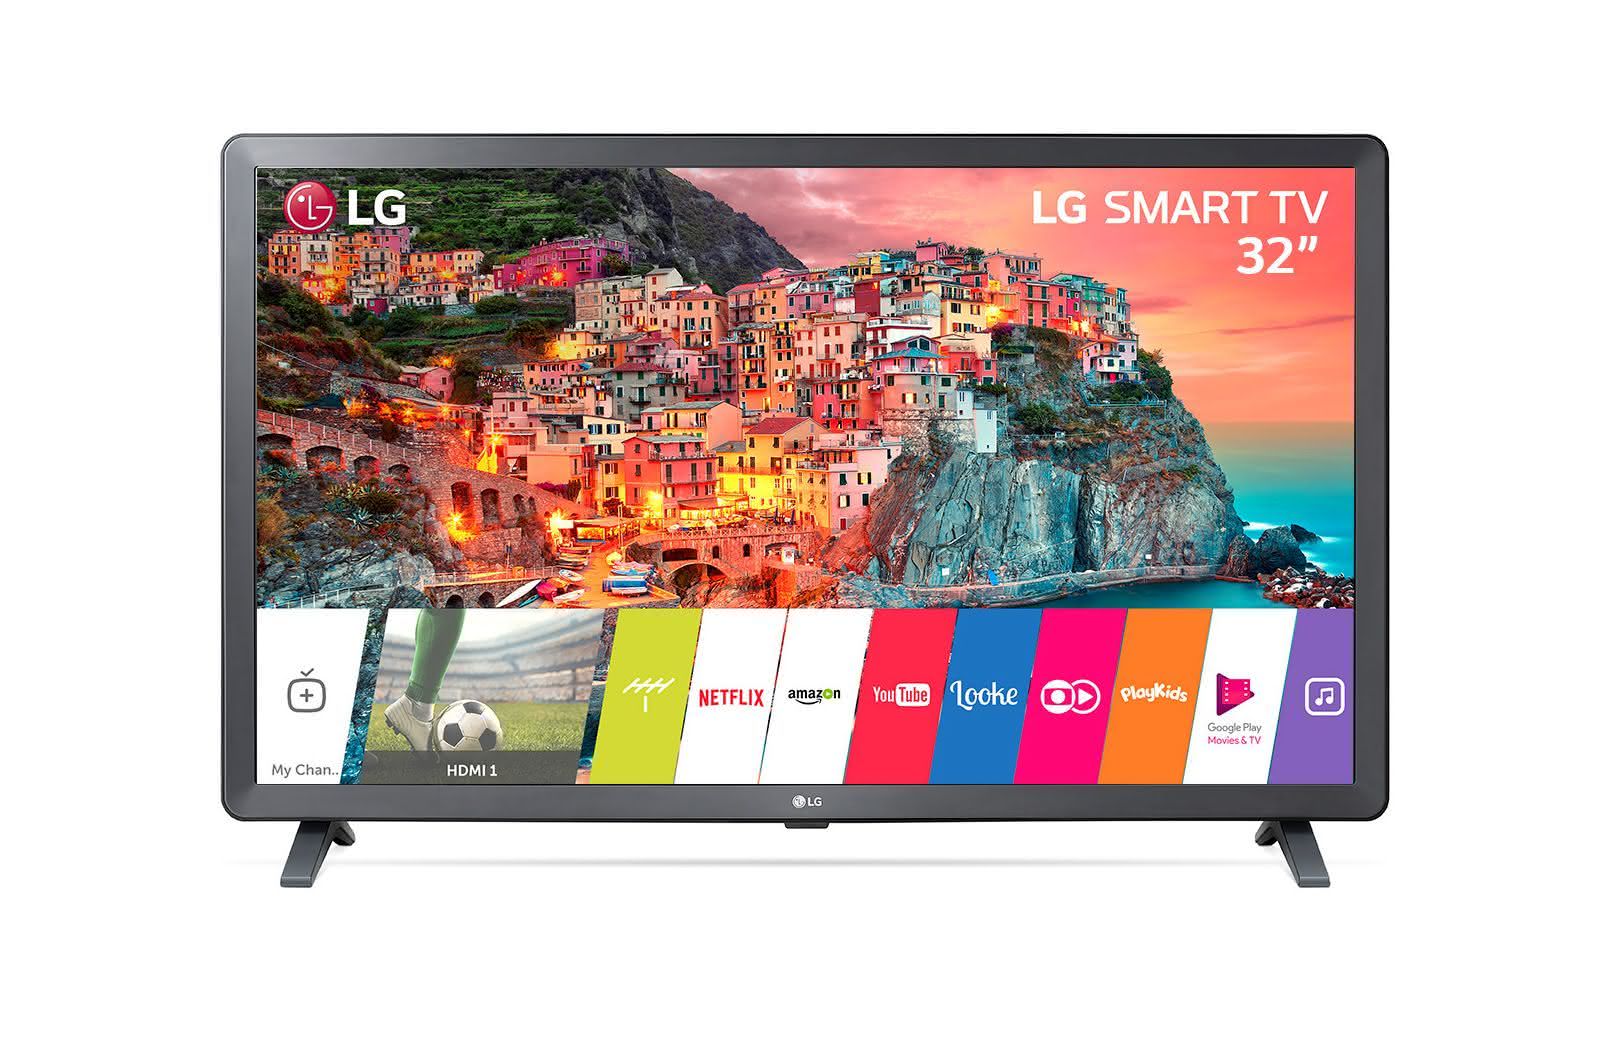 Ижевск телевизоры недорого. LG Smart TV 32 615. Телевизор LG 32lk615b. Телевизор LG 32 Smart.